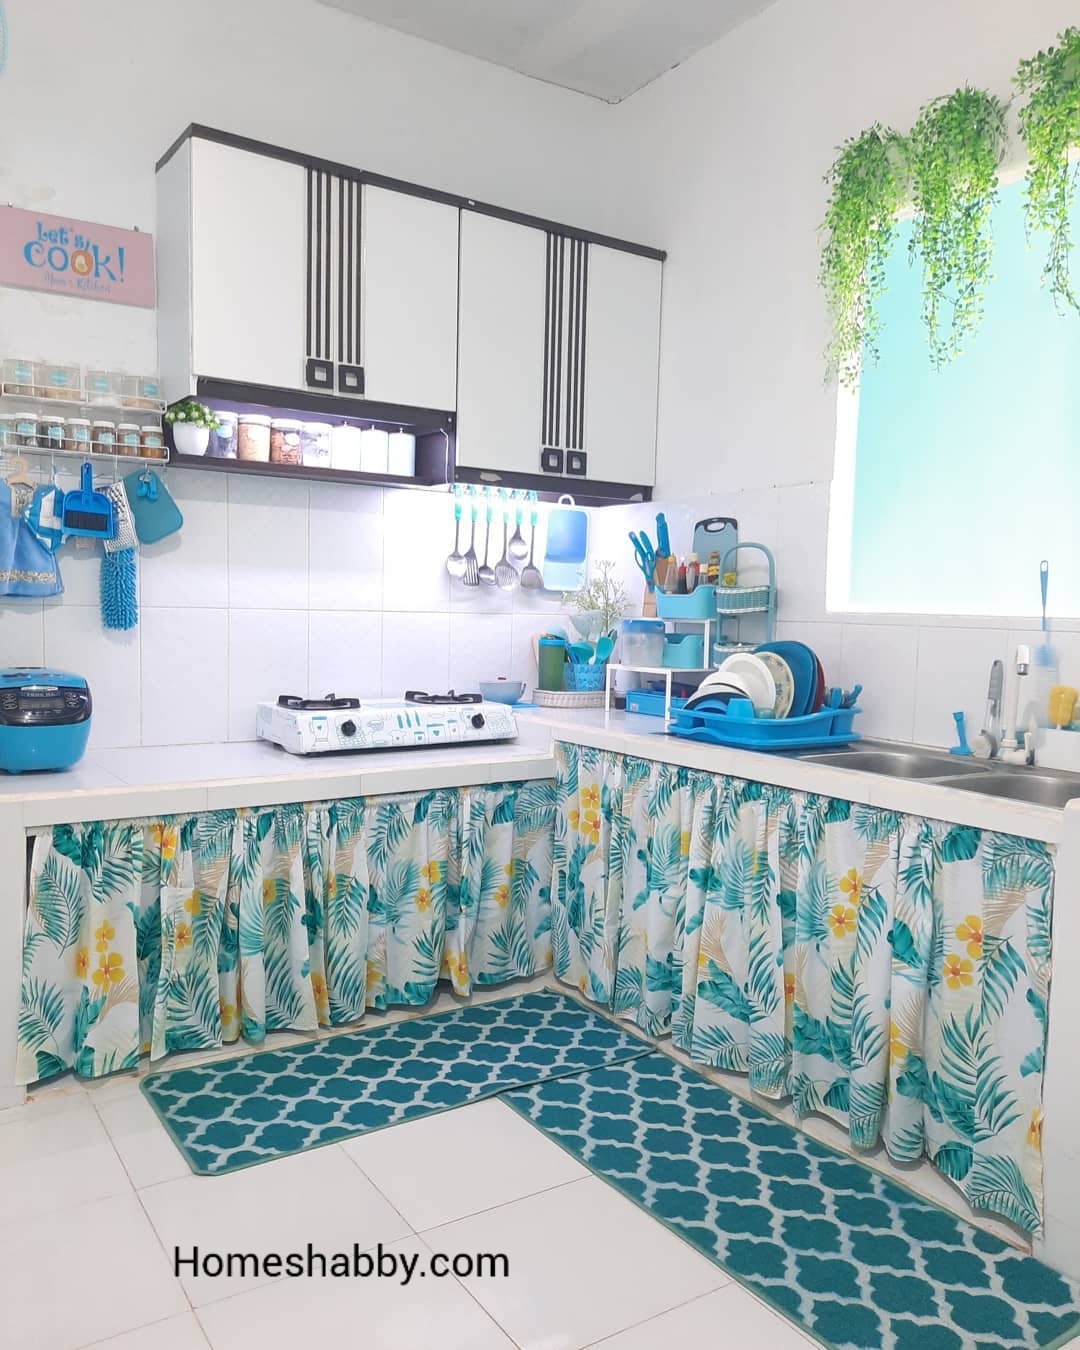 6 Desain Model Dapur Cantik Minimalis 2021 Yang Lagi Trend Homeshabbycom Design Home Plans